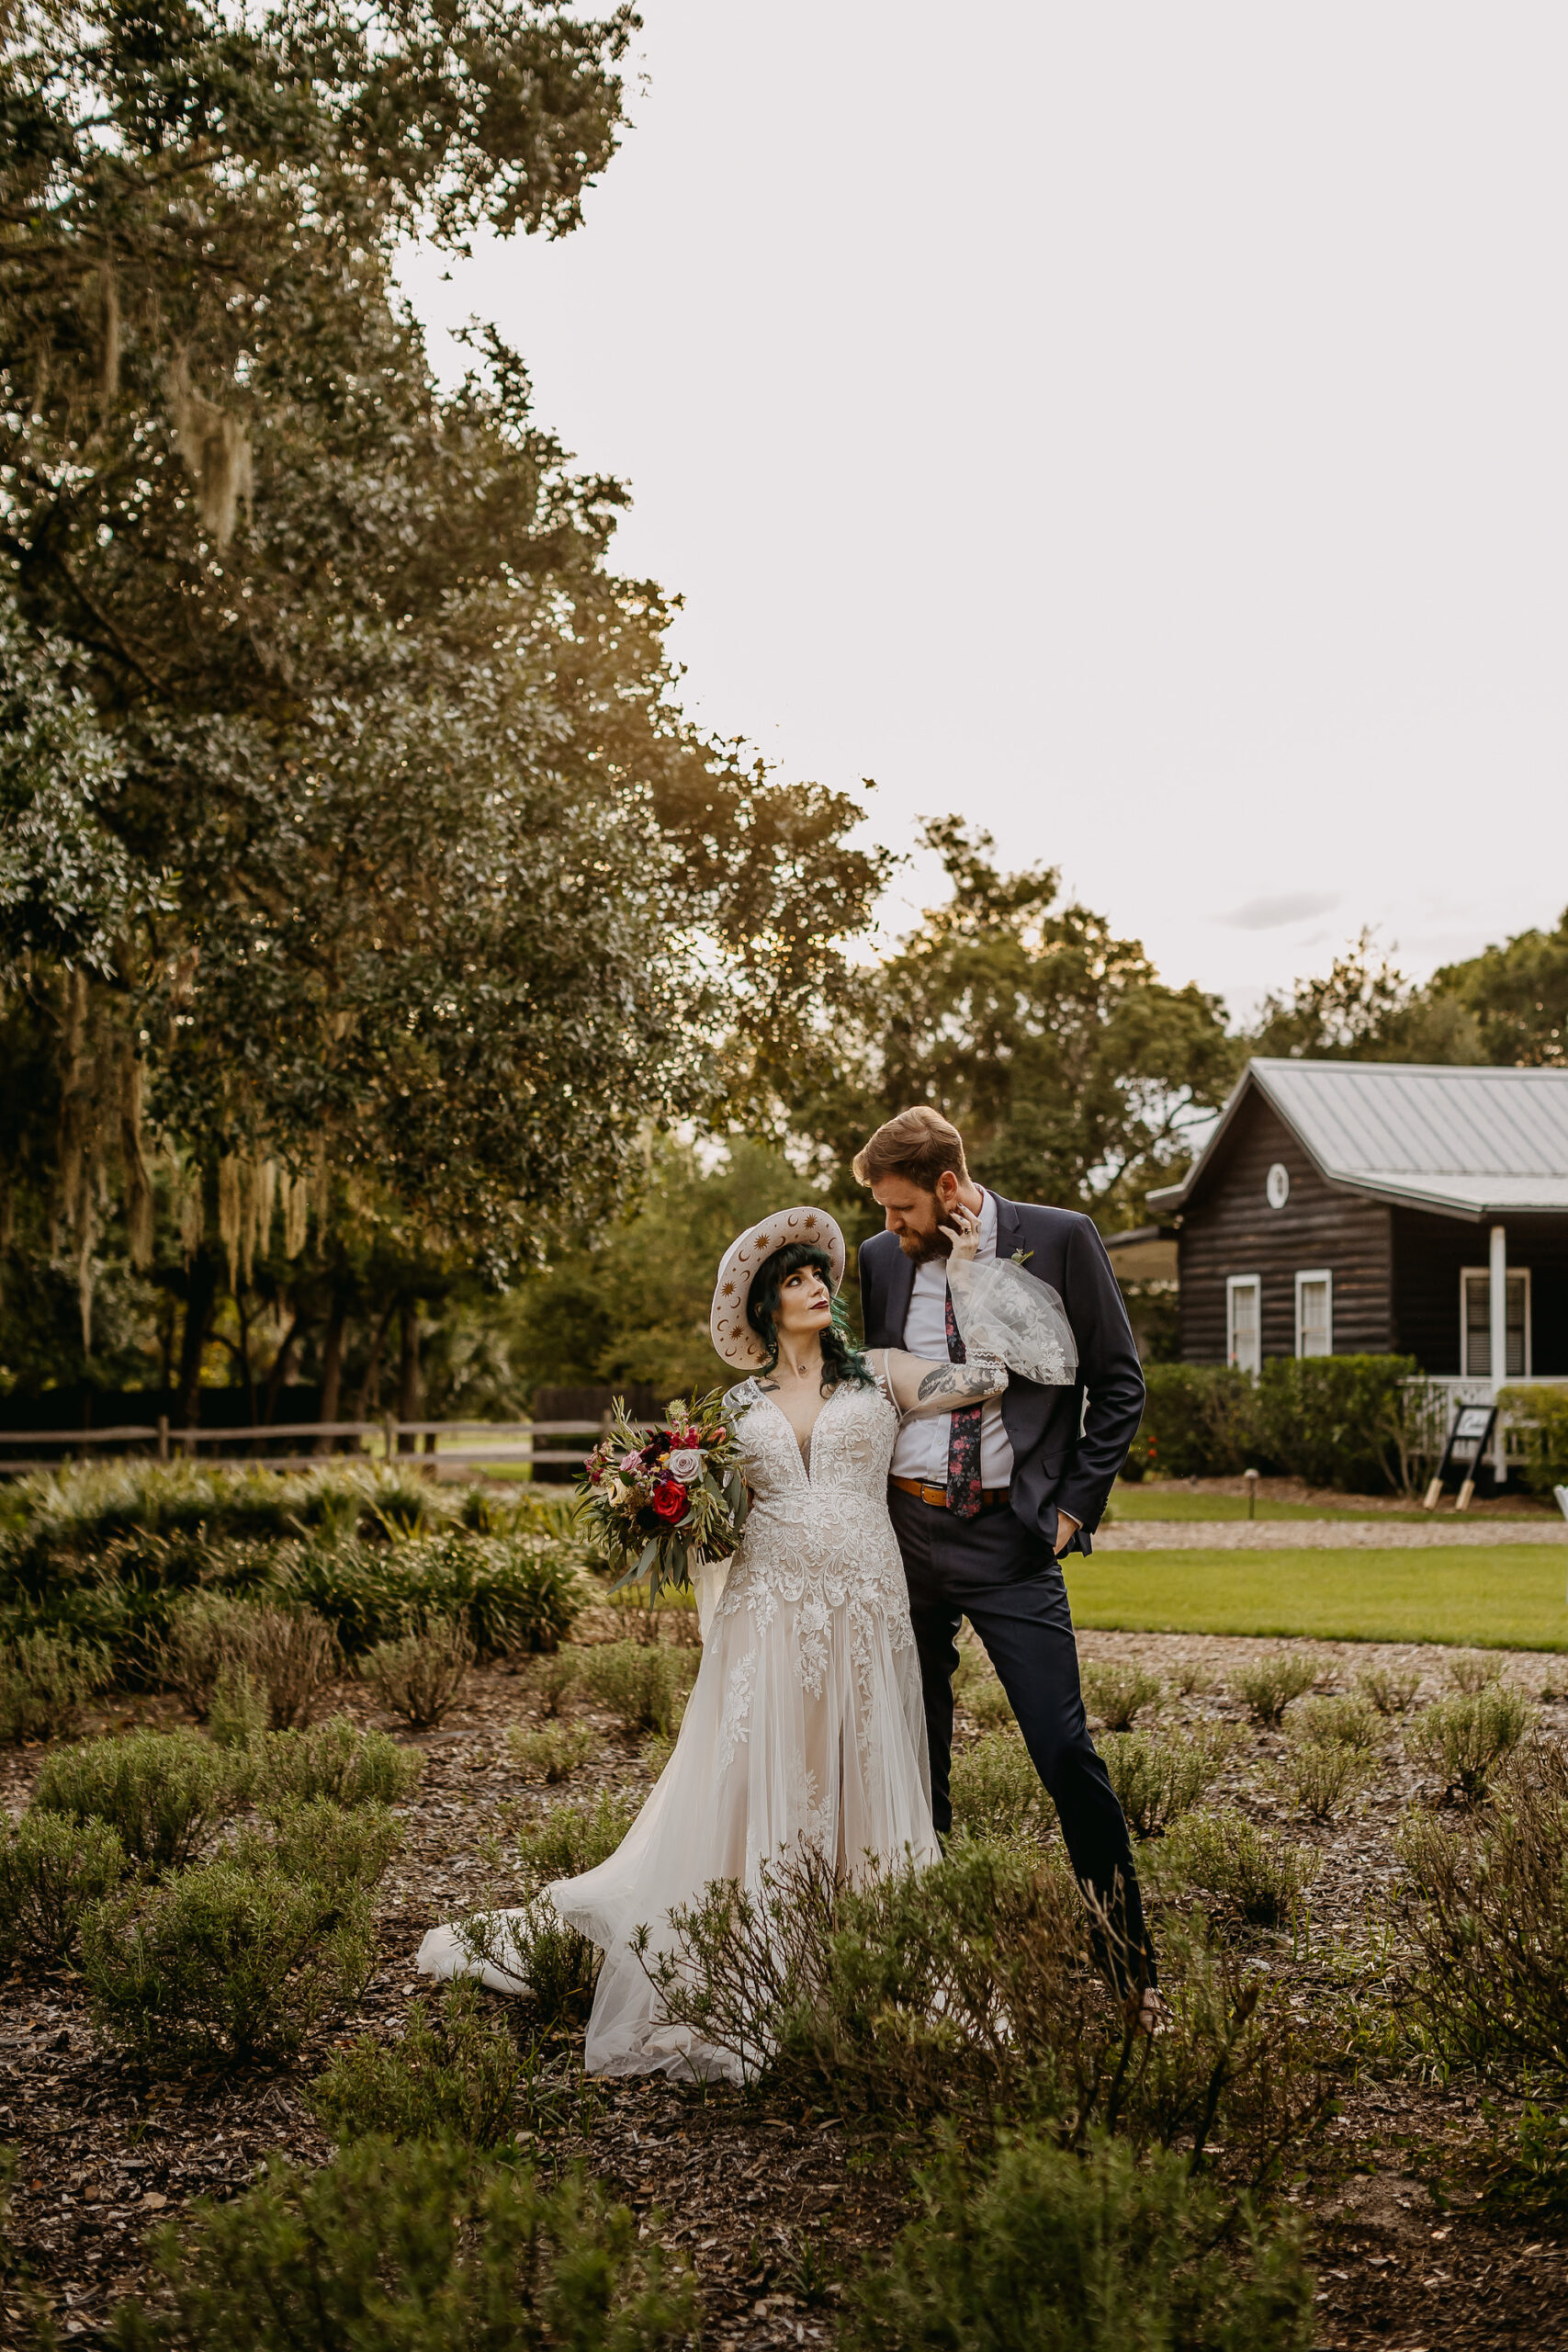 Intimate Outdoor Nature Inspired Bride and Groom Wedding Portrait | Tampa Bay Wedding Venue Cross Creek Ranch